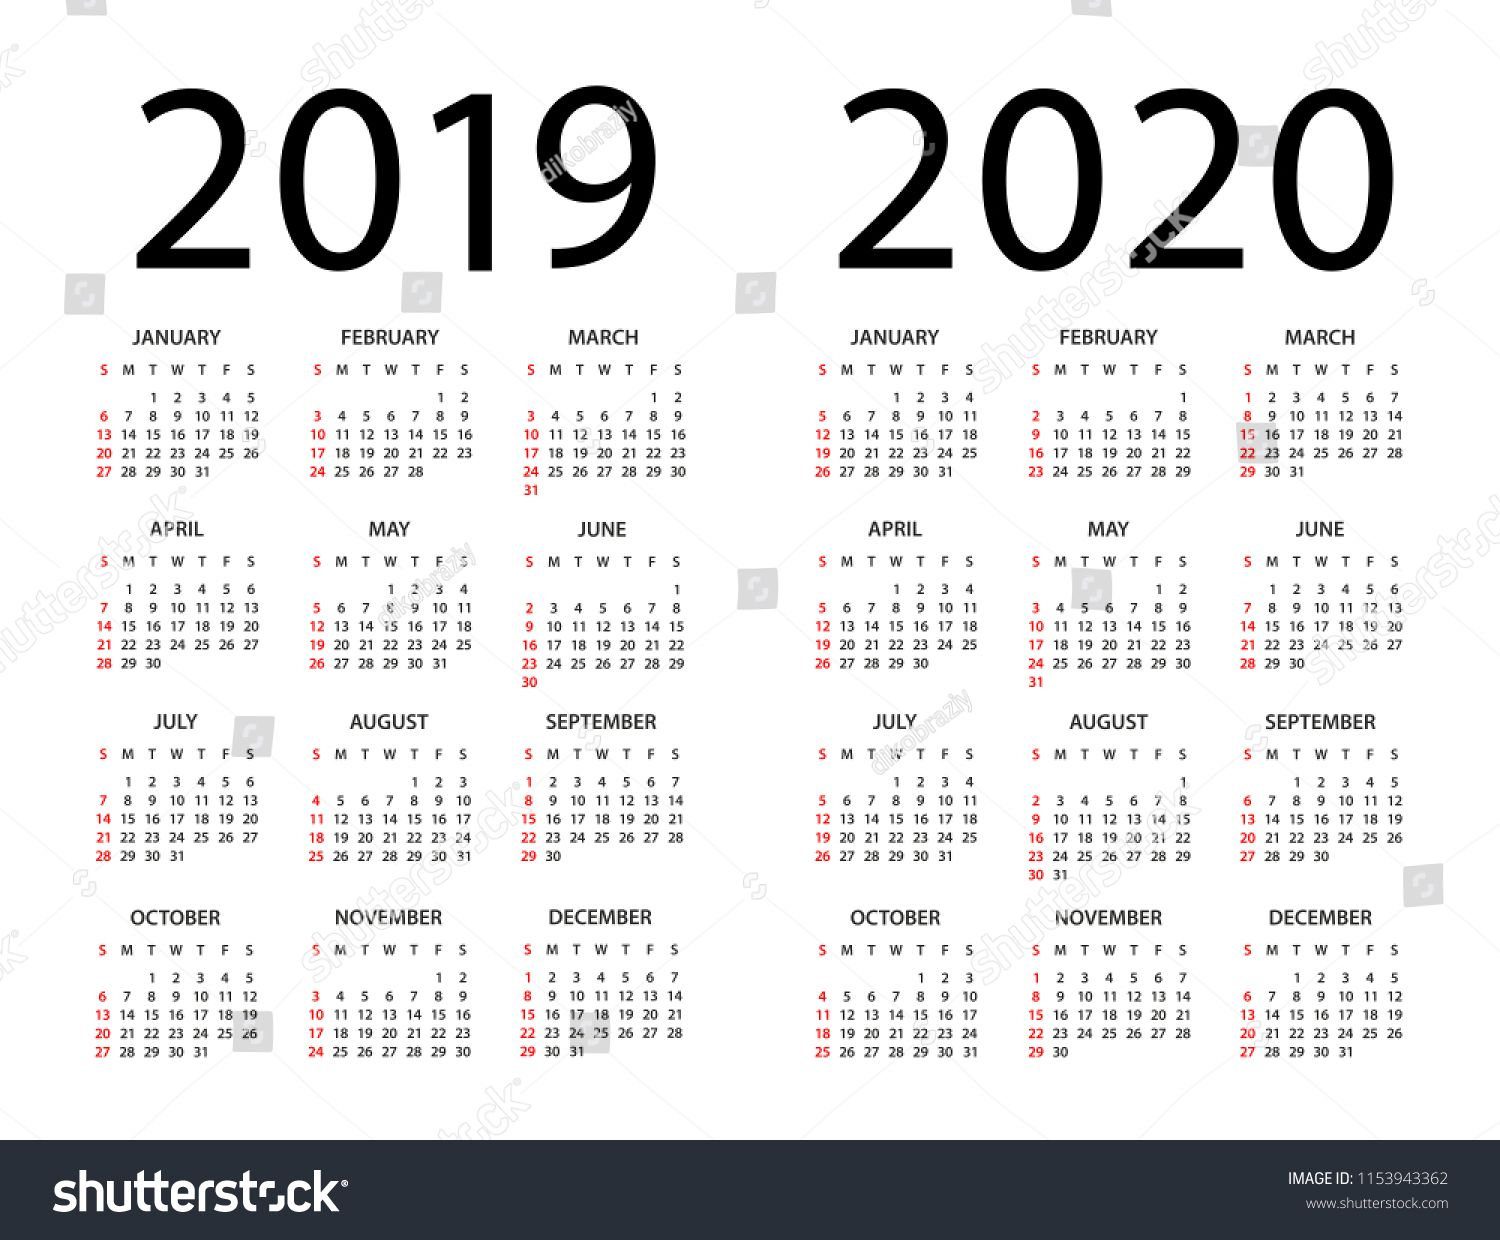 Calendar 2019 2020 Year - Vector Illustration. Week Starts